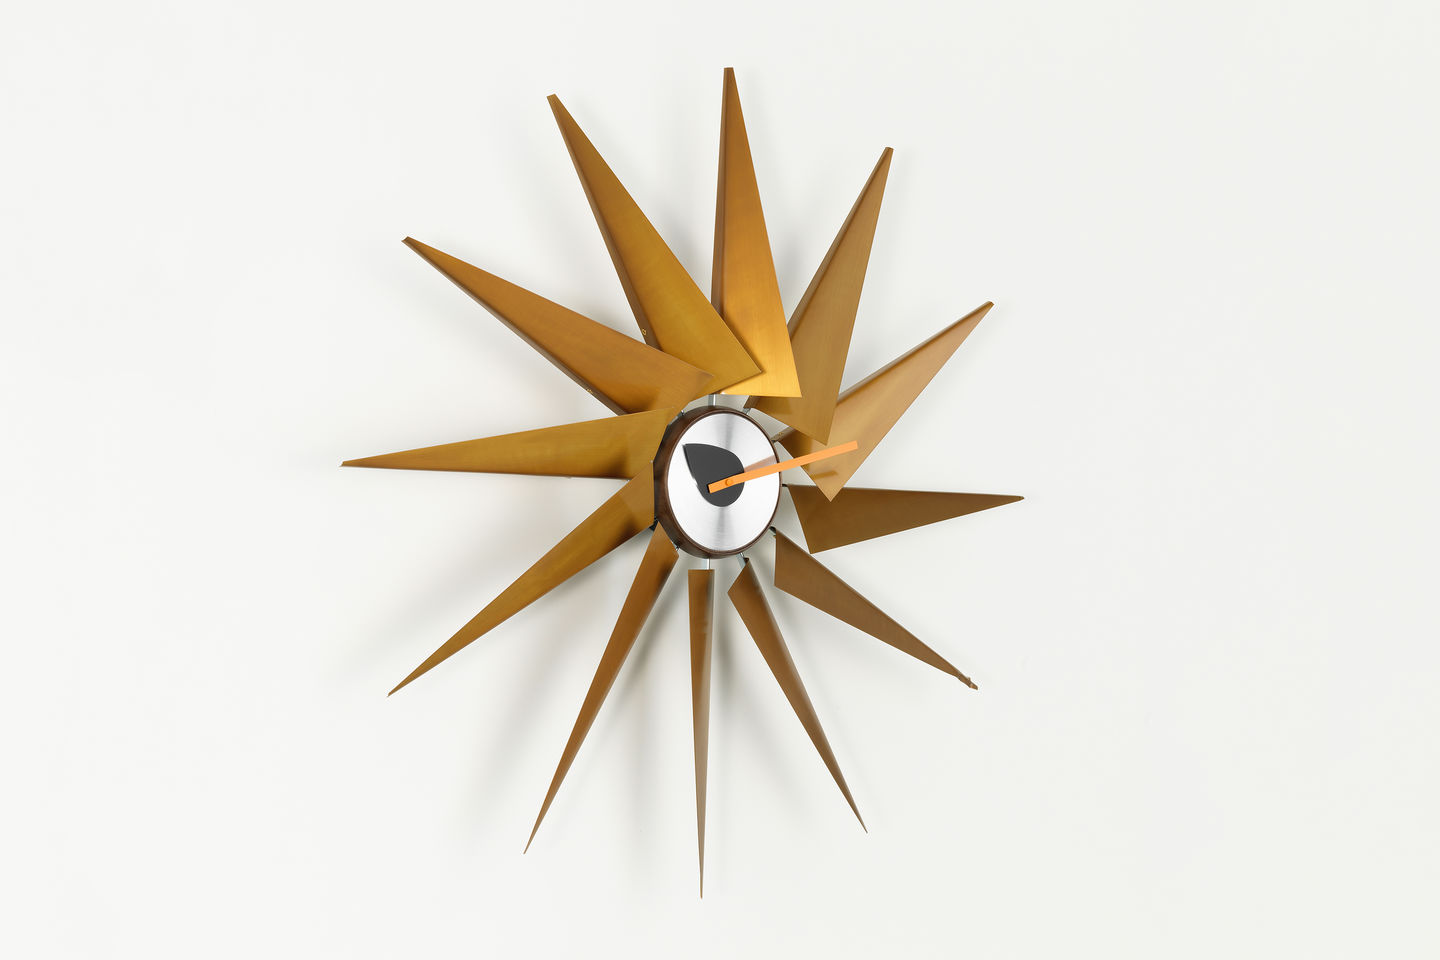 Vitra Turbine Wall Clock by George Nelson